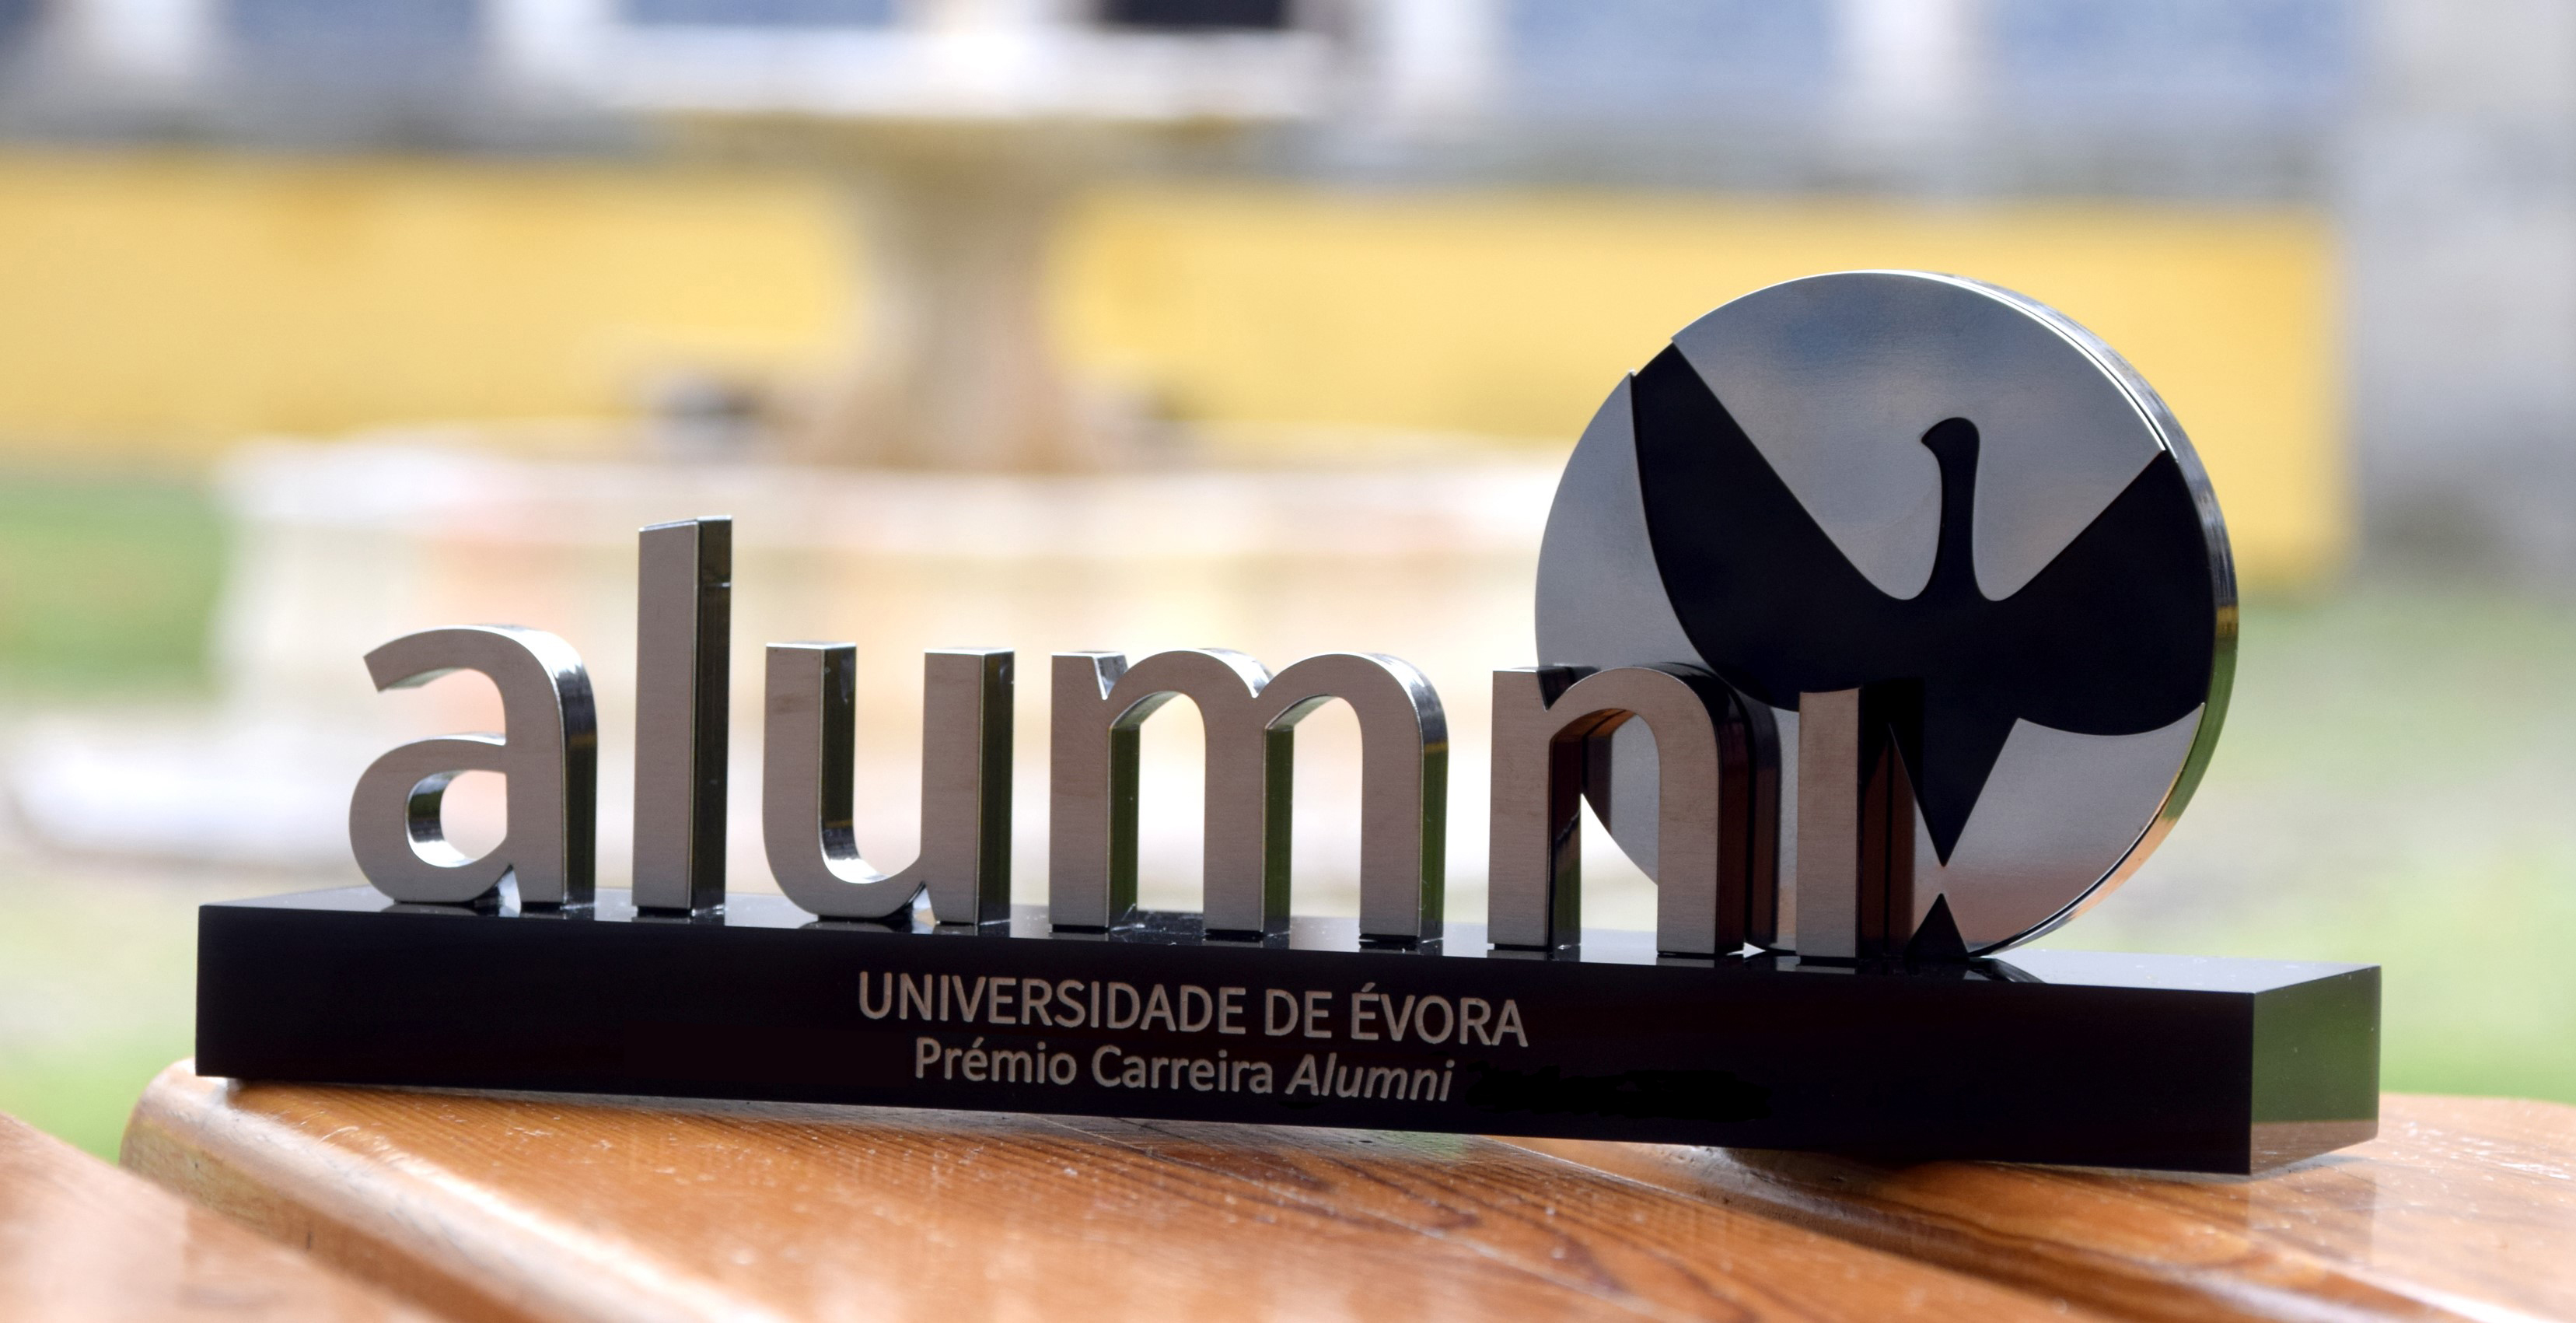 Alumni Career Award